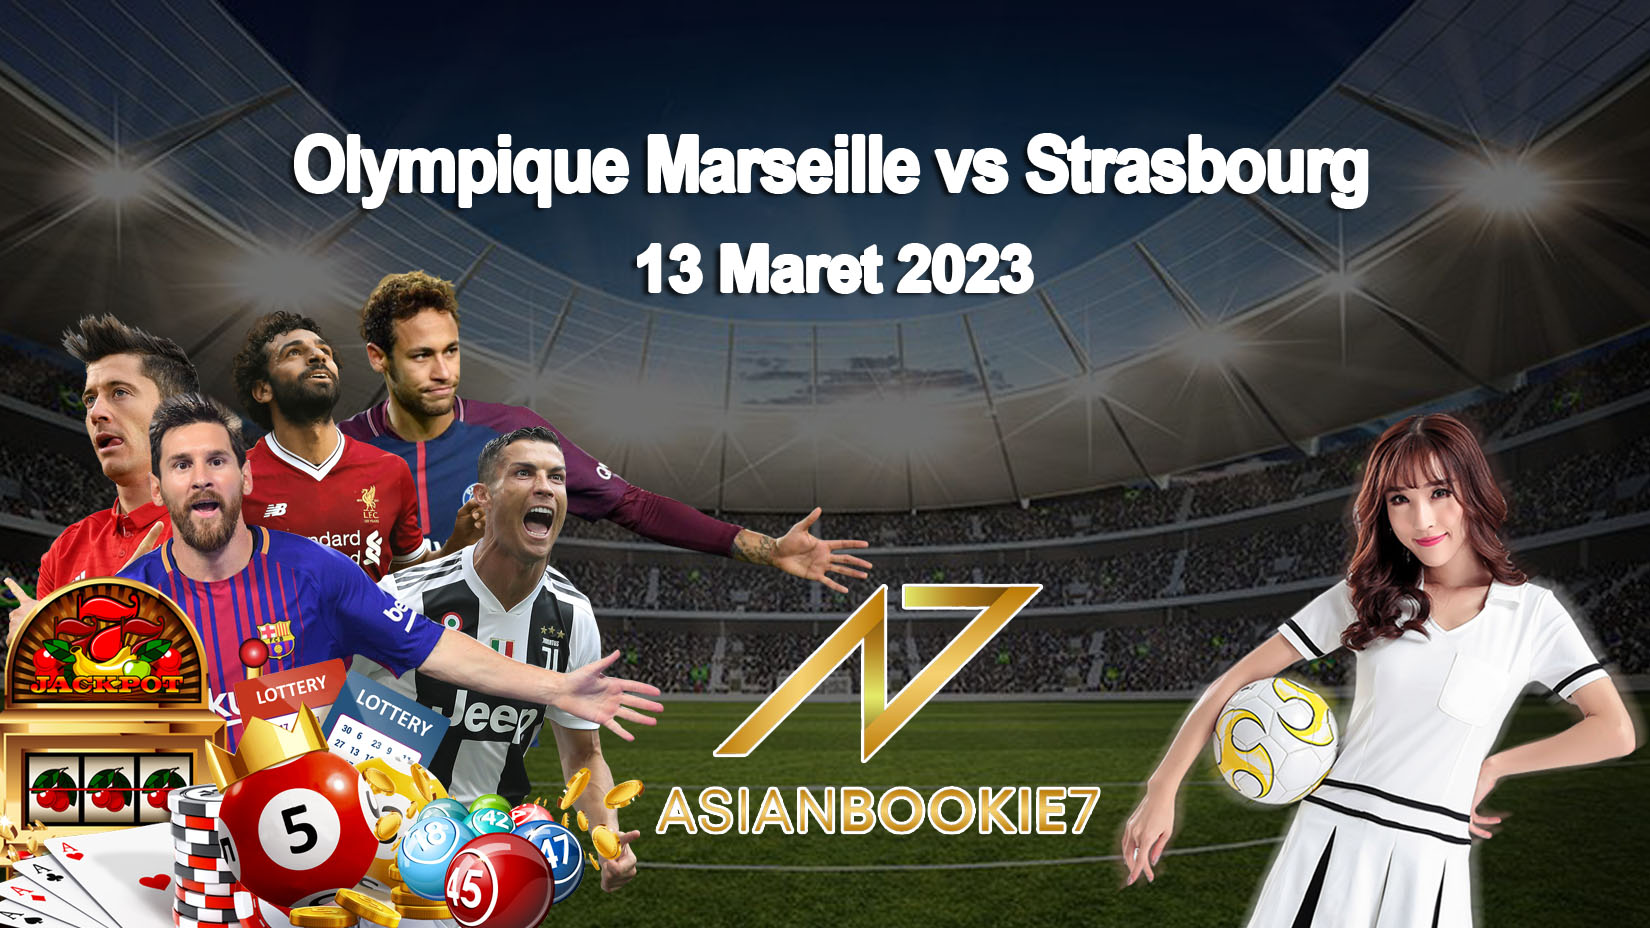 Prediksi Olympique Marseille vs Strasbourg 13 Maret 2023